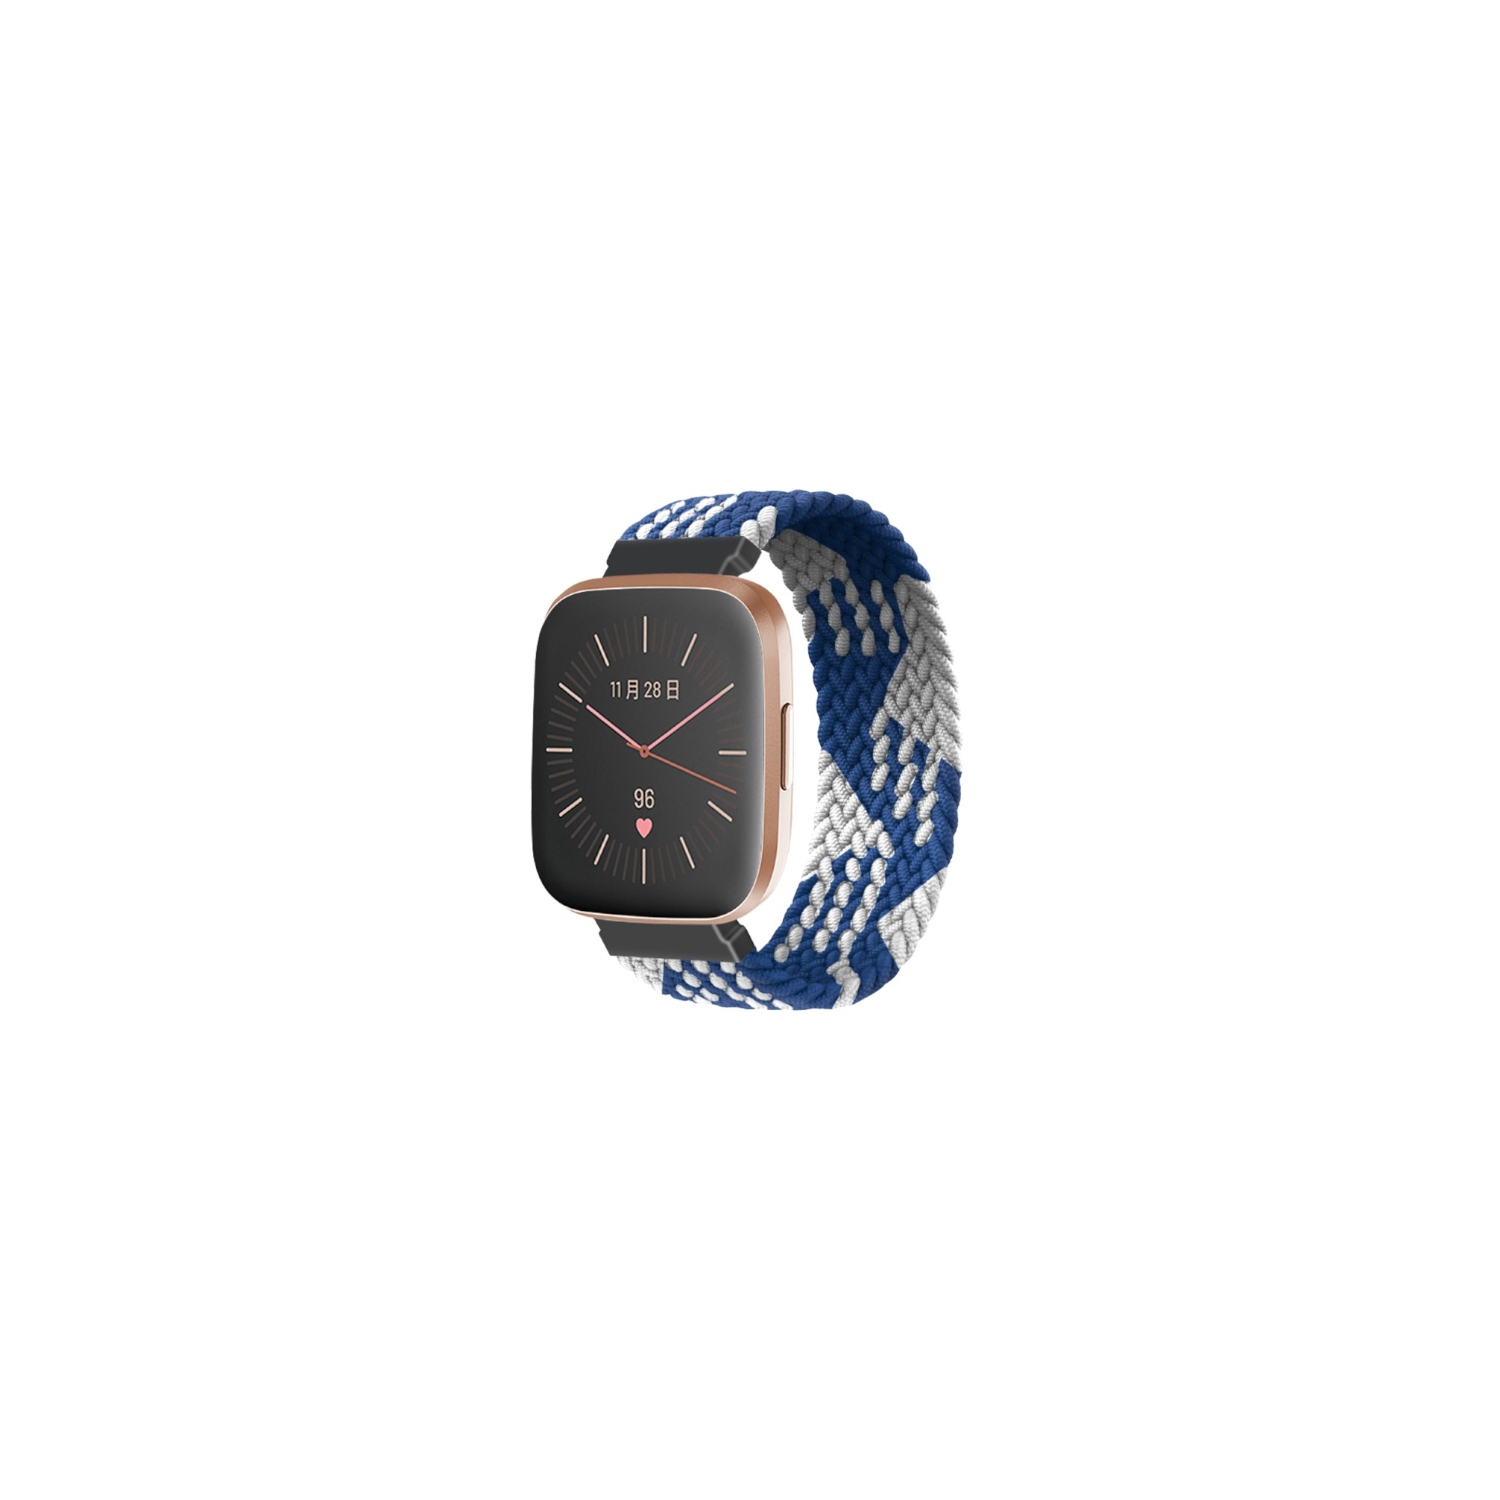 StrapsCo Patterned Elastic Nylon Watch Band Strap for Fitbit Versa & Versa 2 - S - Fits 5.8" - 6.1" Wrist - Blue & White Buffalo